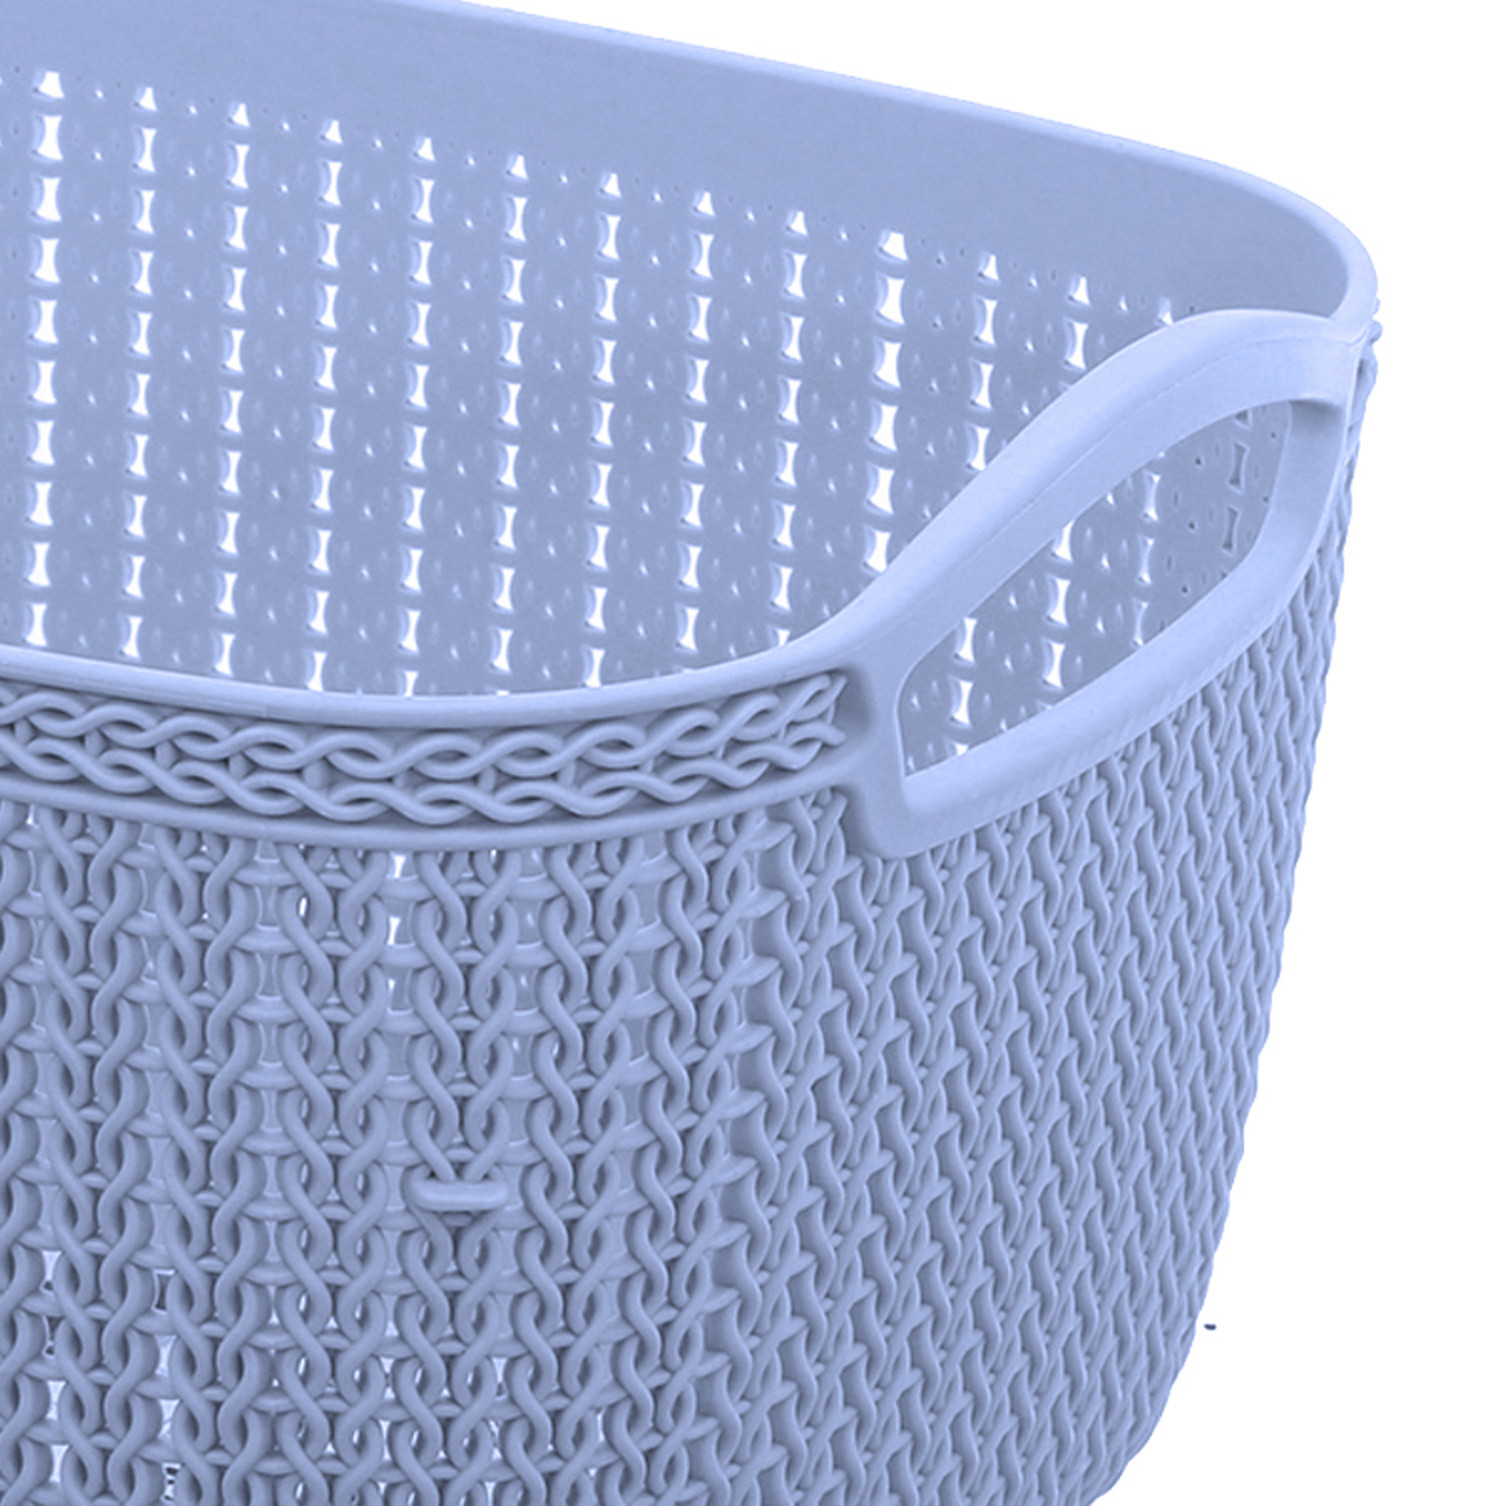 Kuber Industries Unbreakable Plastic Multipurpose Medium Size Flexible Storage Baskets / Fruit Vegetable Bathroom Stationary Home Basket with Handles (Peach & Grey) -CTKTC39077